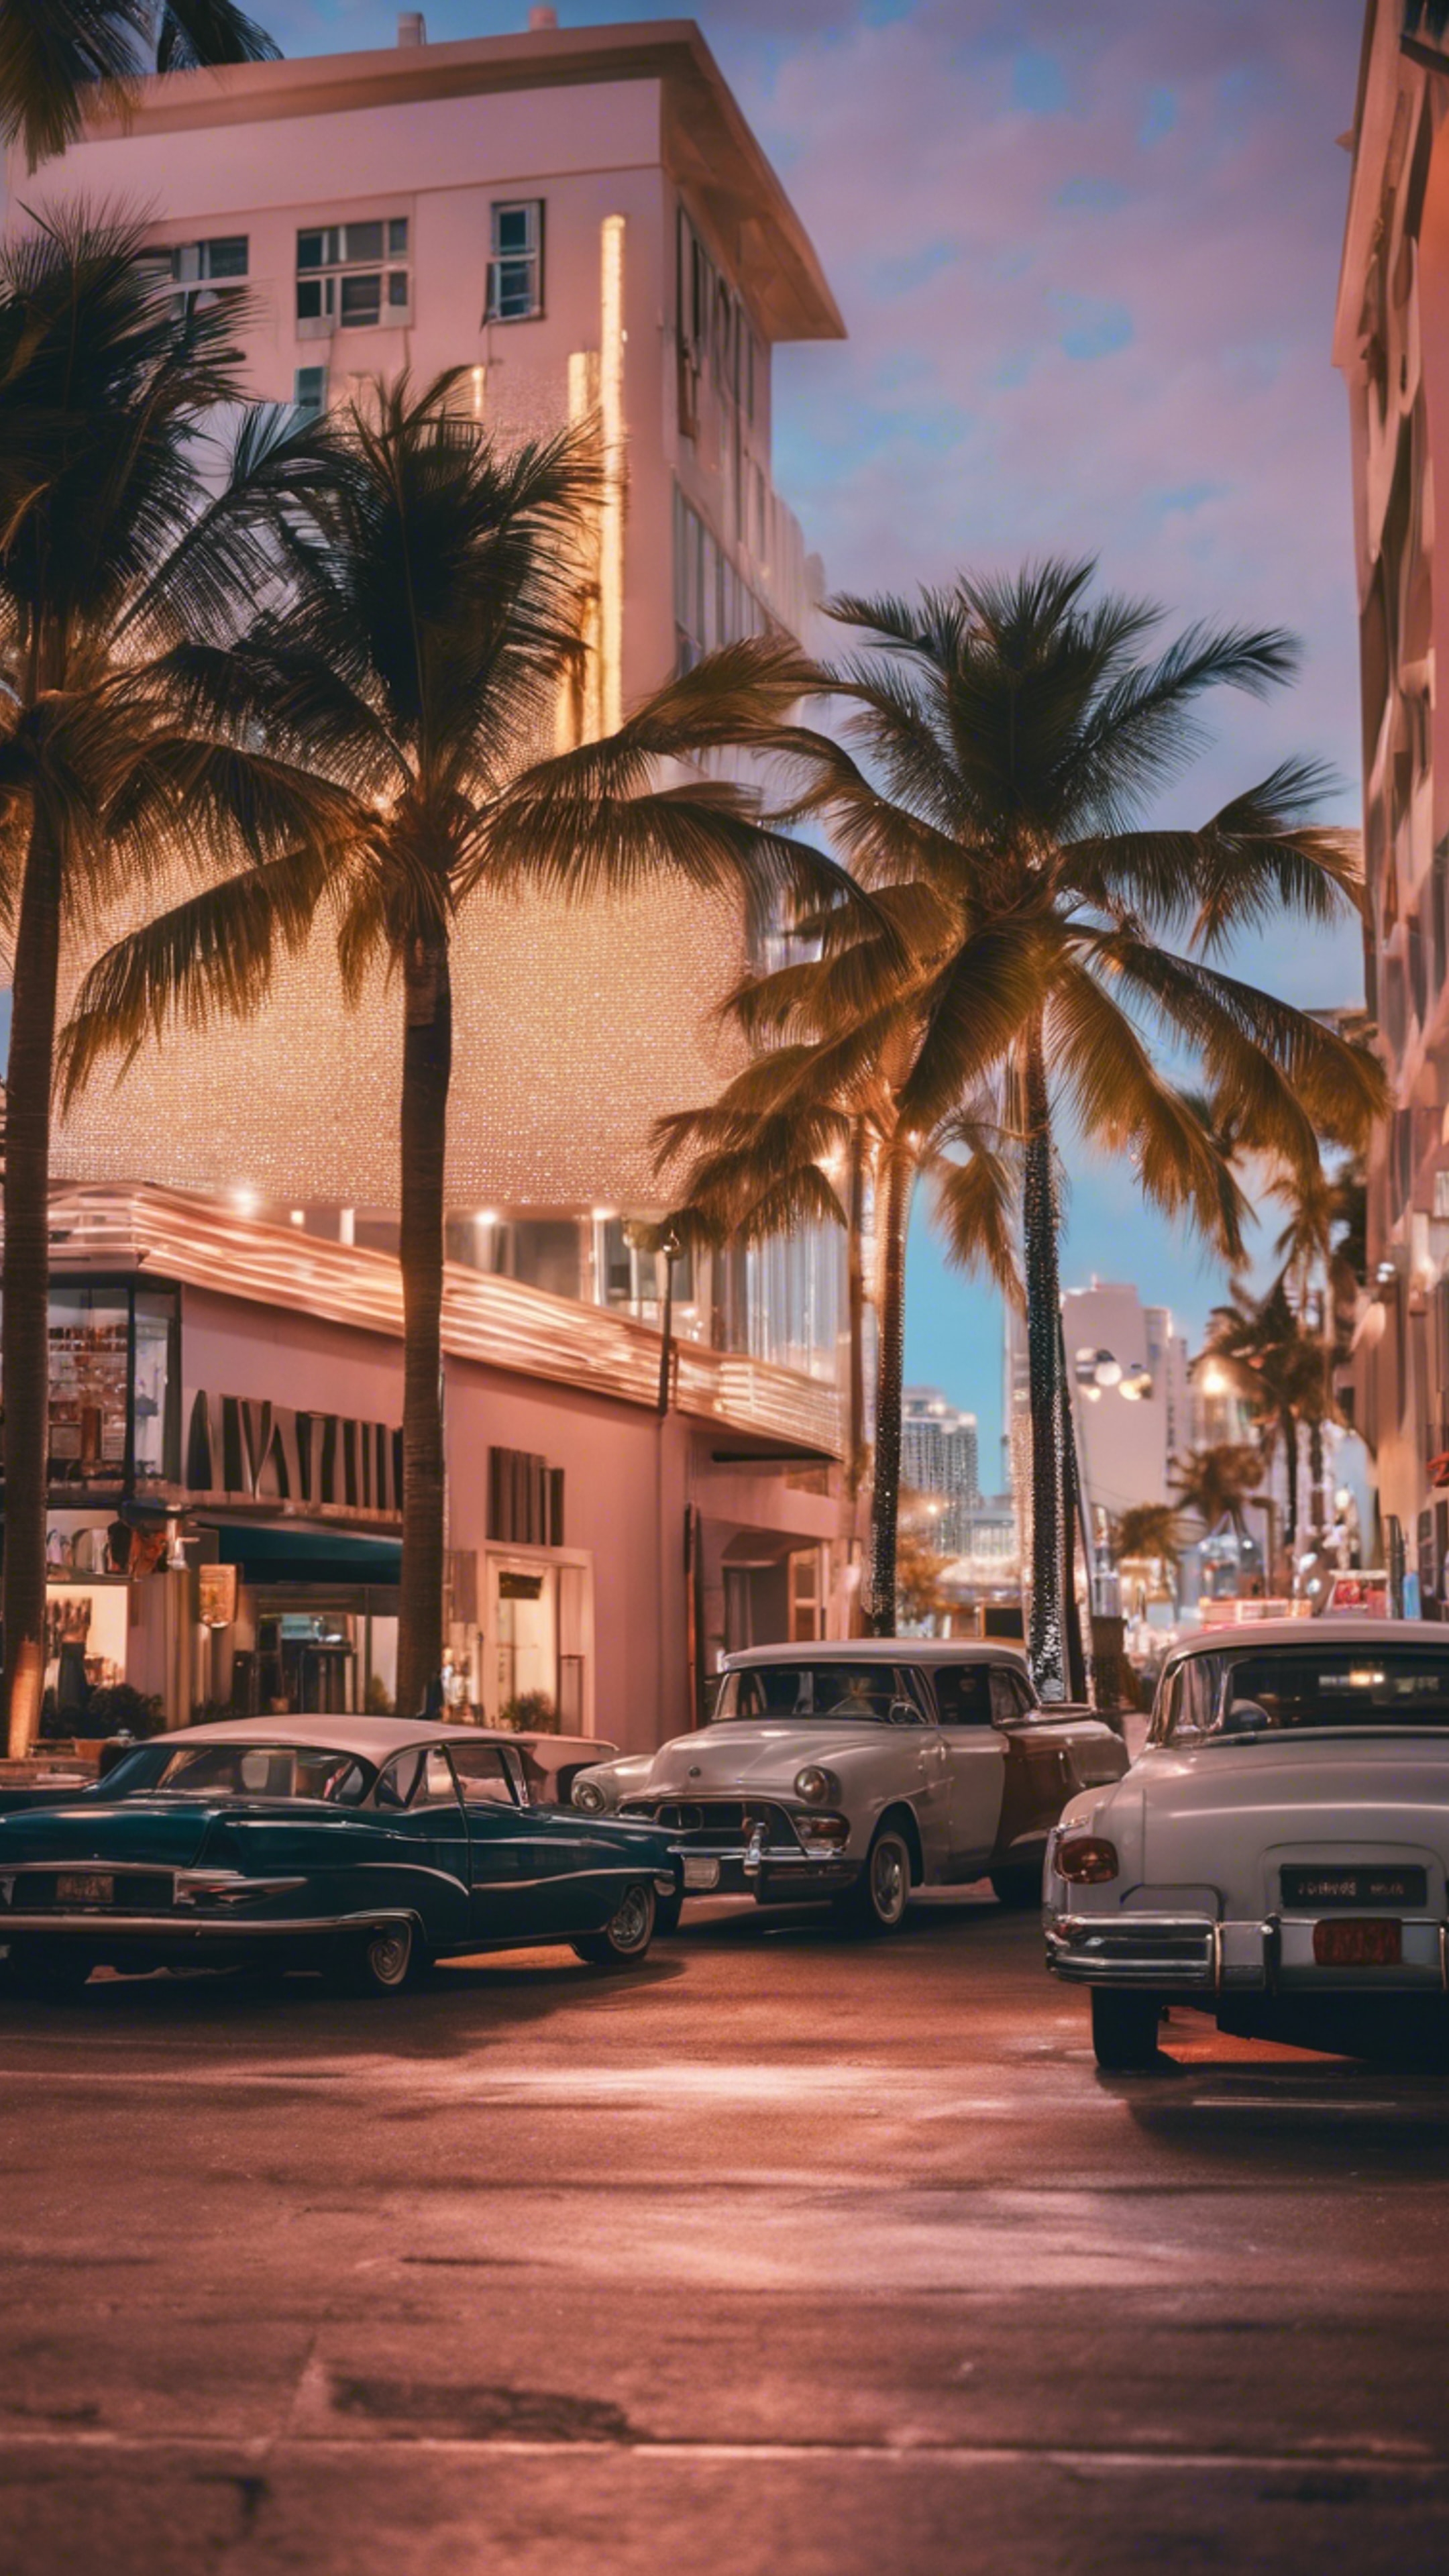 A bustling Miami Beach street scene, with art deco buildings and palm trees, vibrant nightlife atmosphere. duvar kağıdı[c899e7f744884bb387cd]